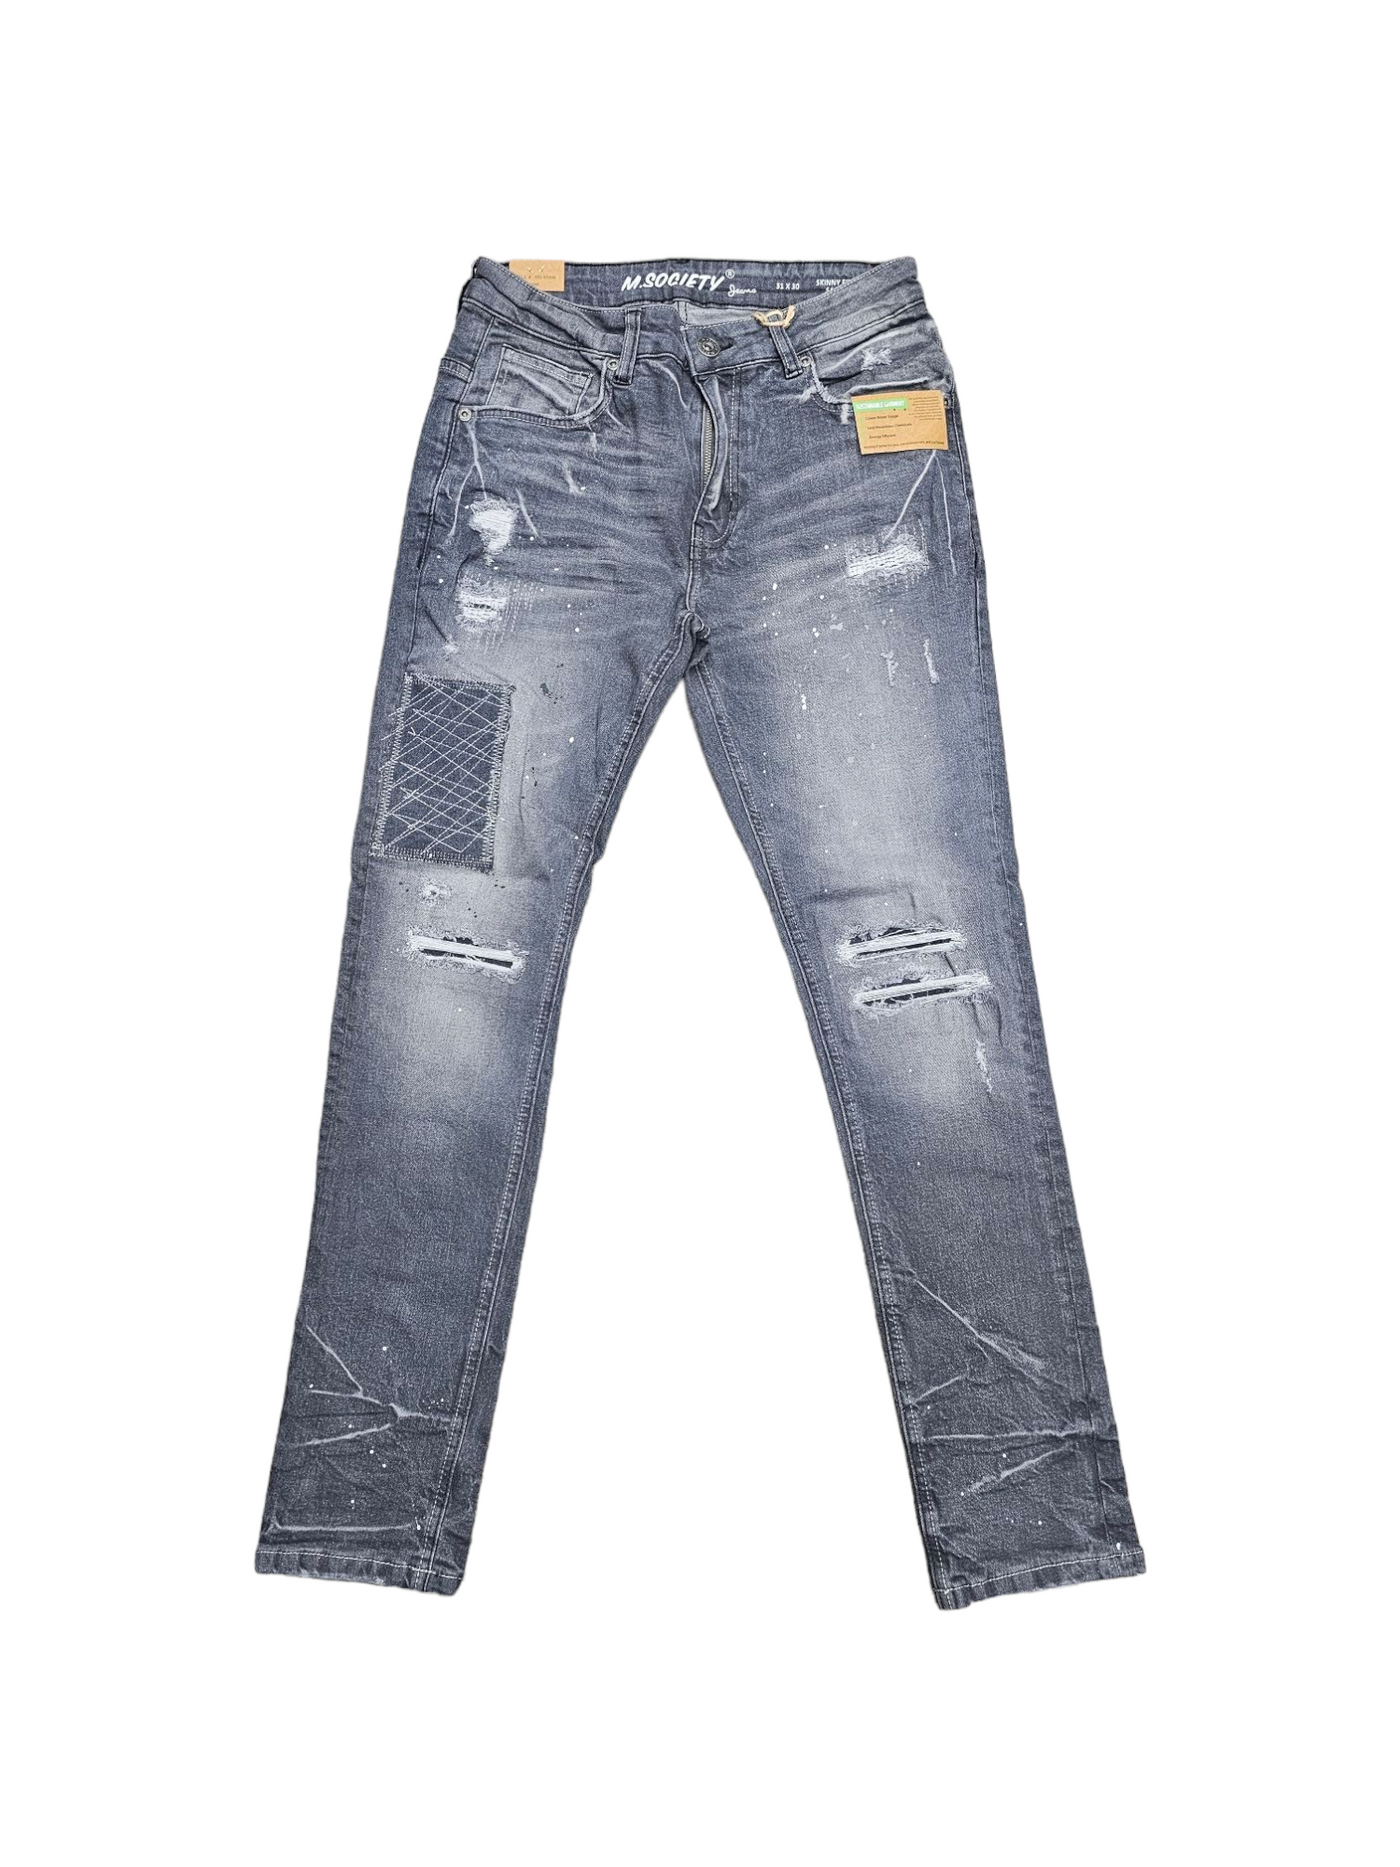 M. Society Men's Stretched Denim Jeans Grey MS-80309